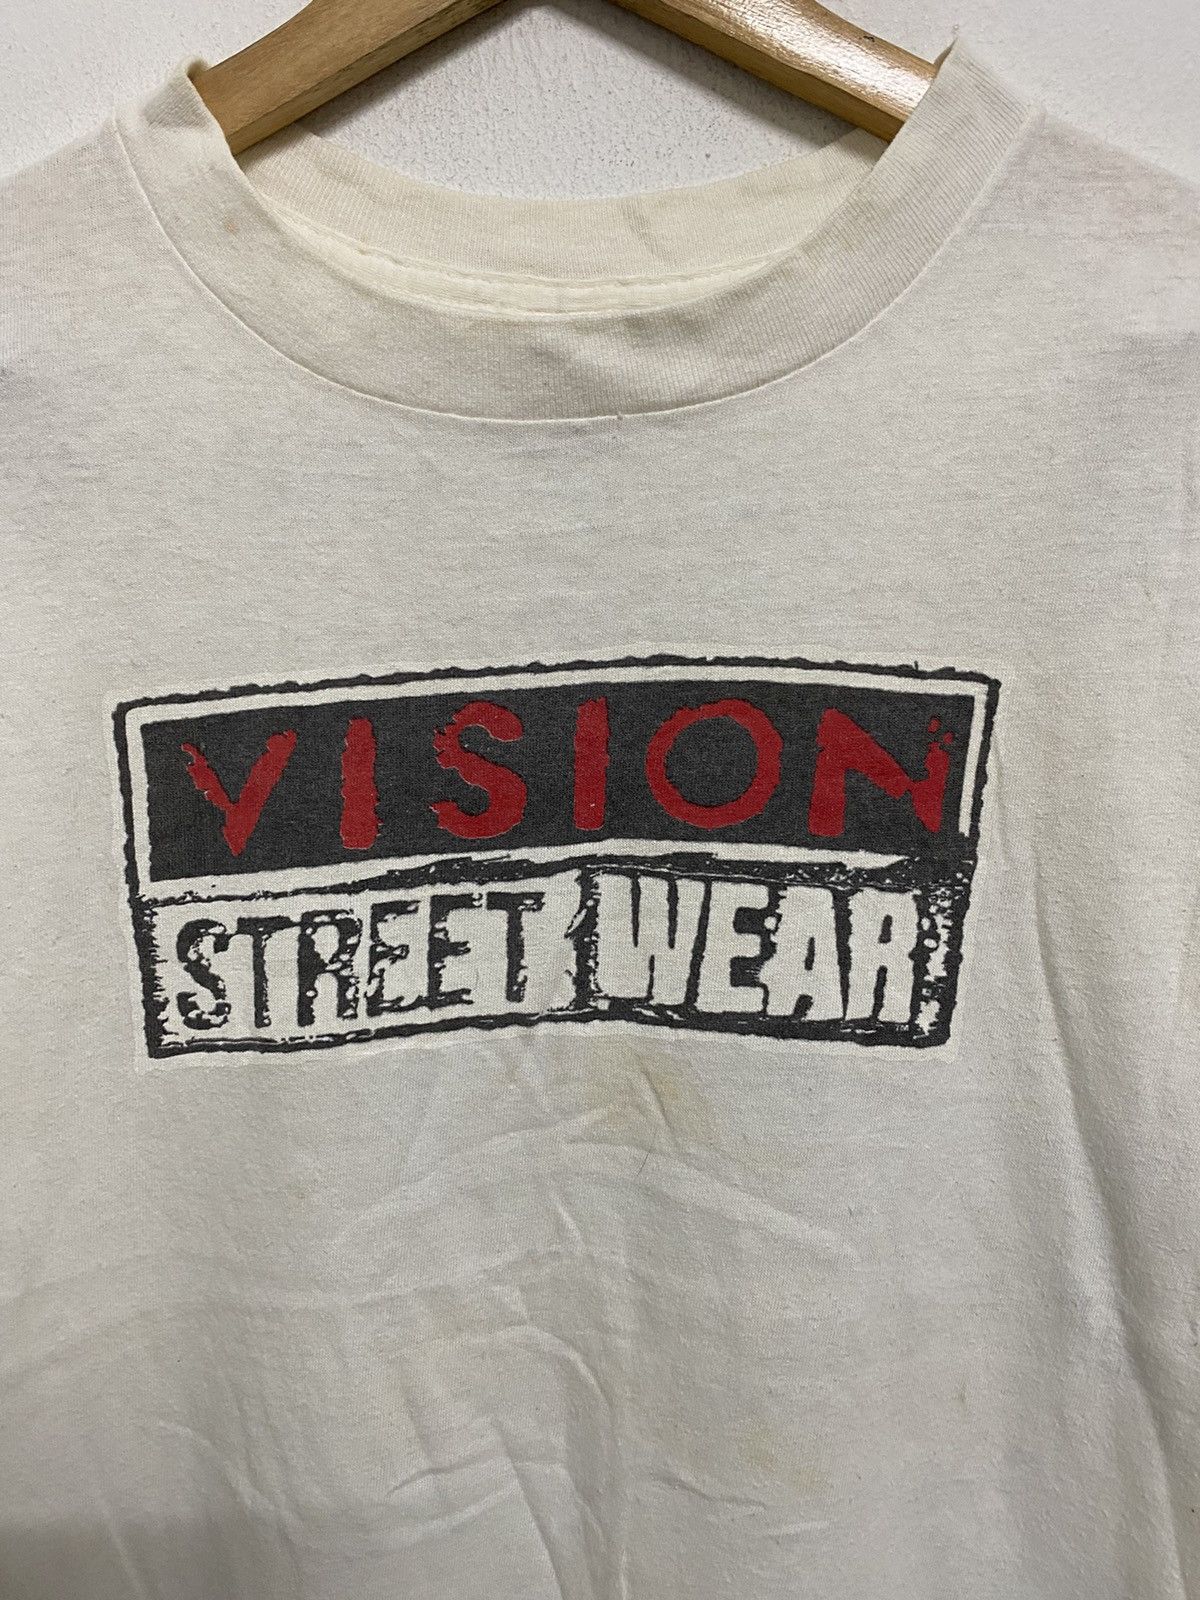 Vintage 80’s Vision Streetwear Tshirt - 3